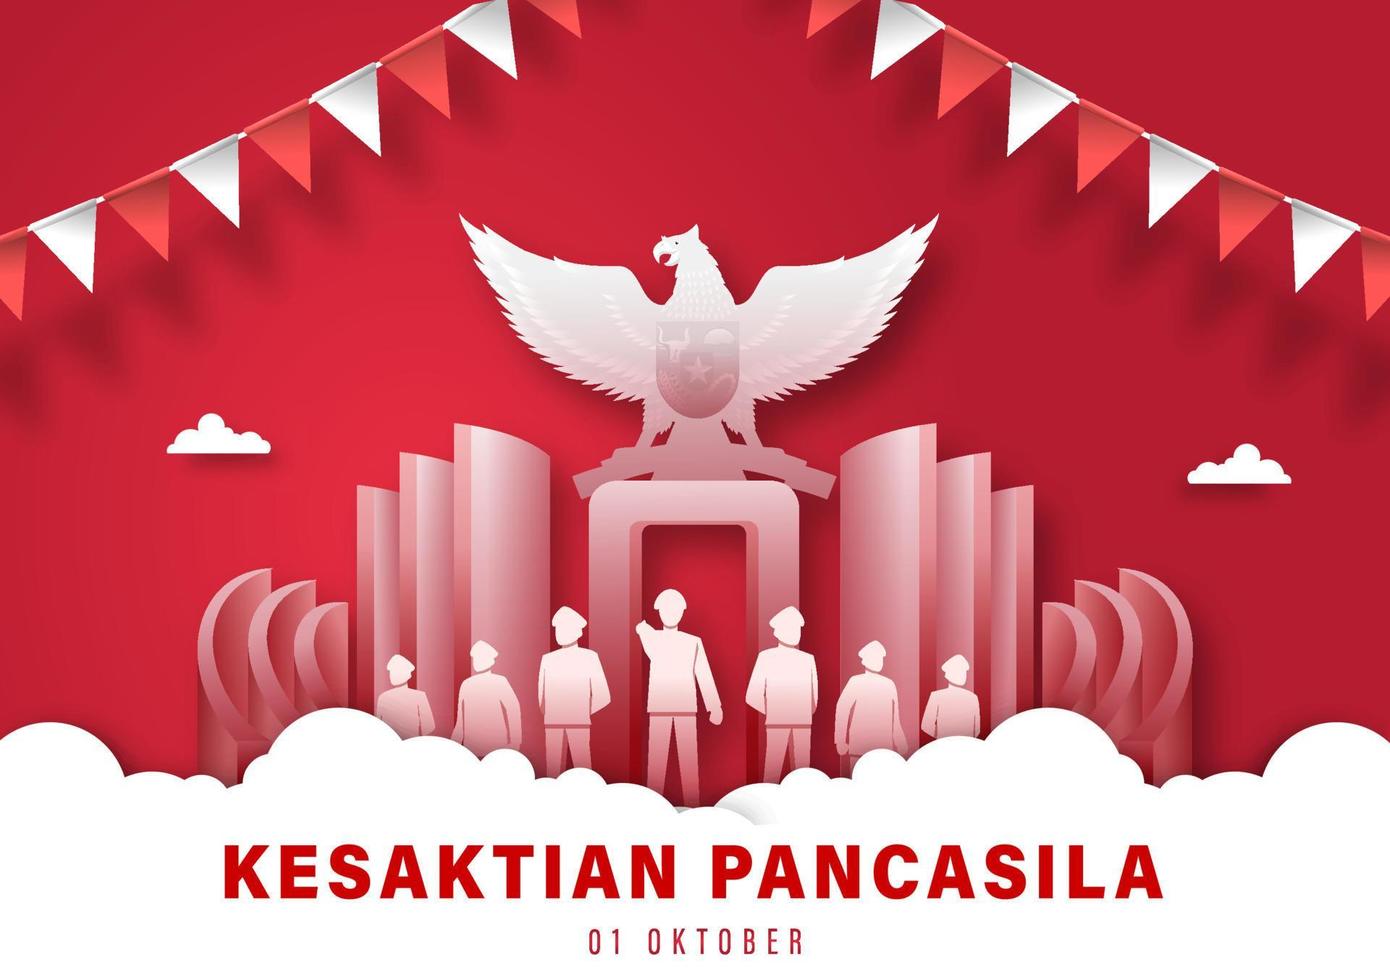 glücklicher Pancasila-Tag. vektorillustration der pancasila-feier in indonesien vektor